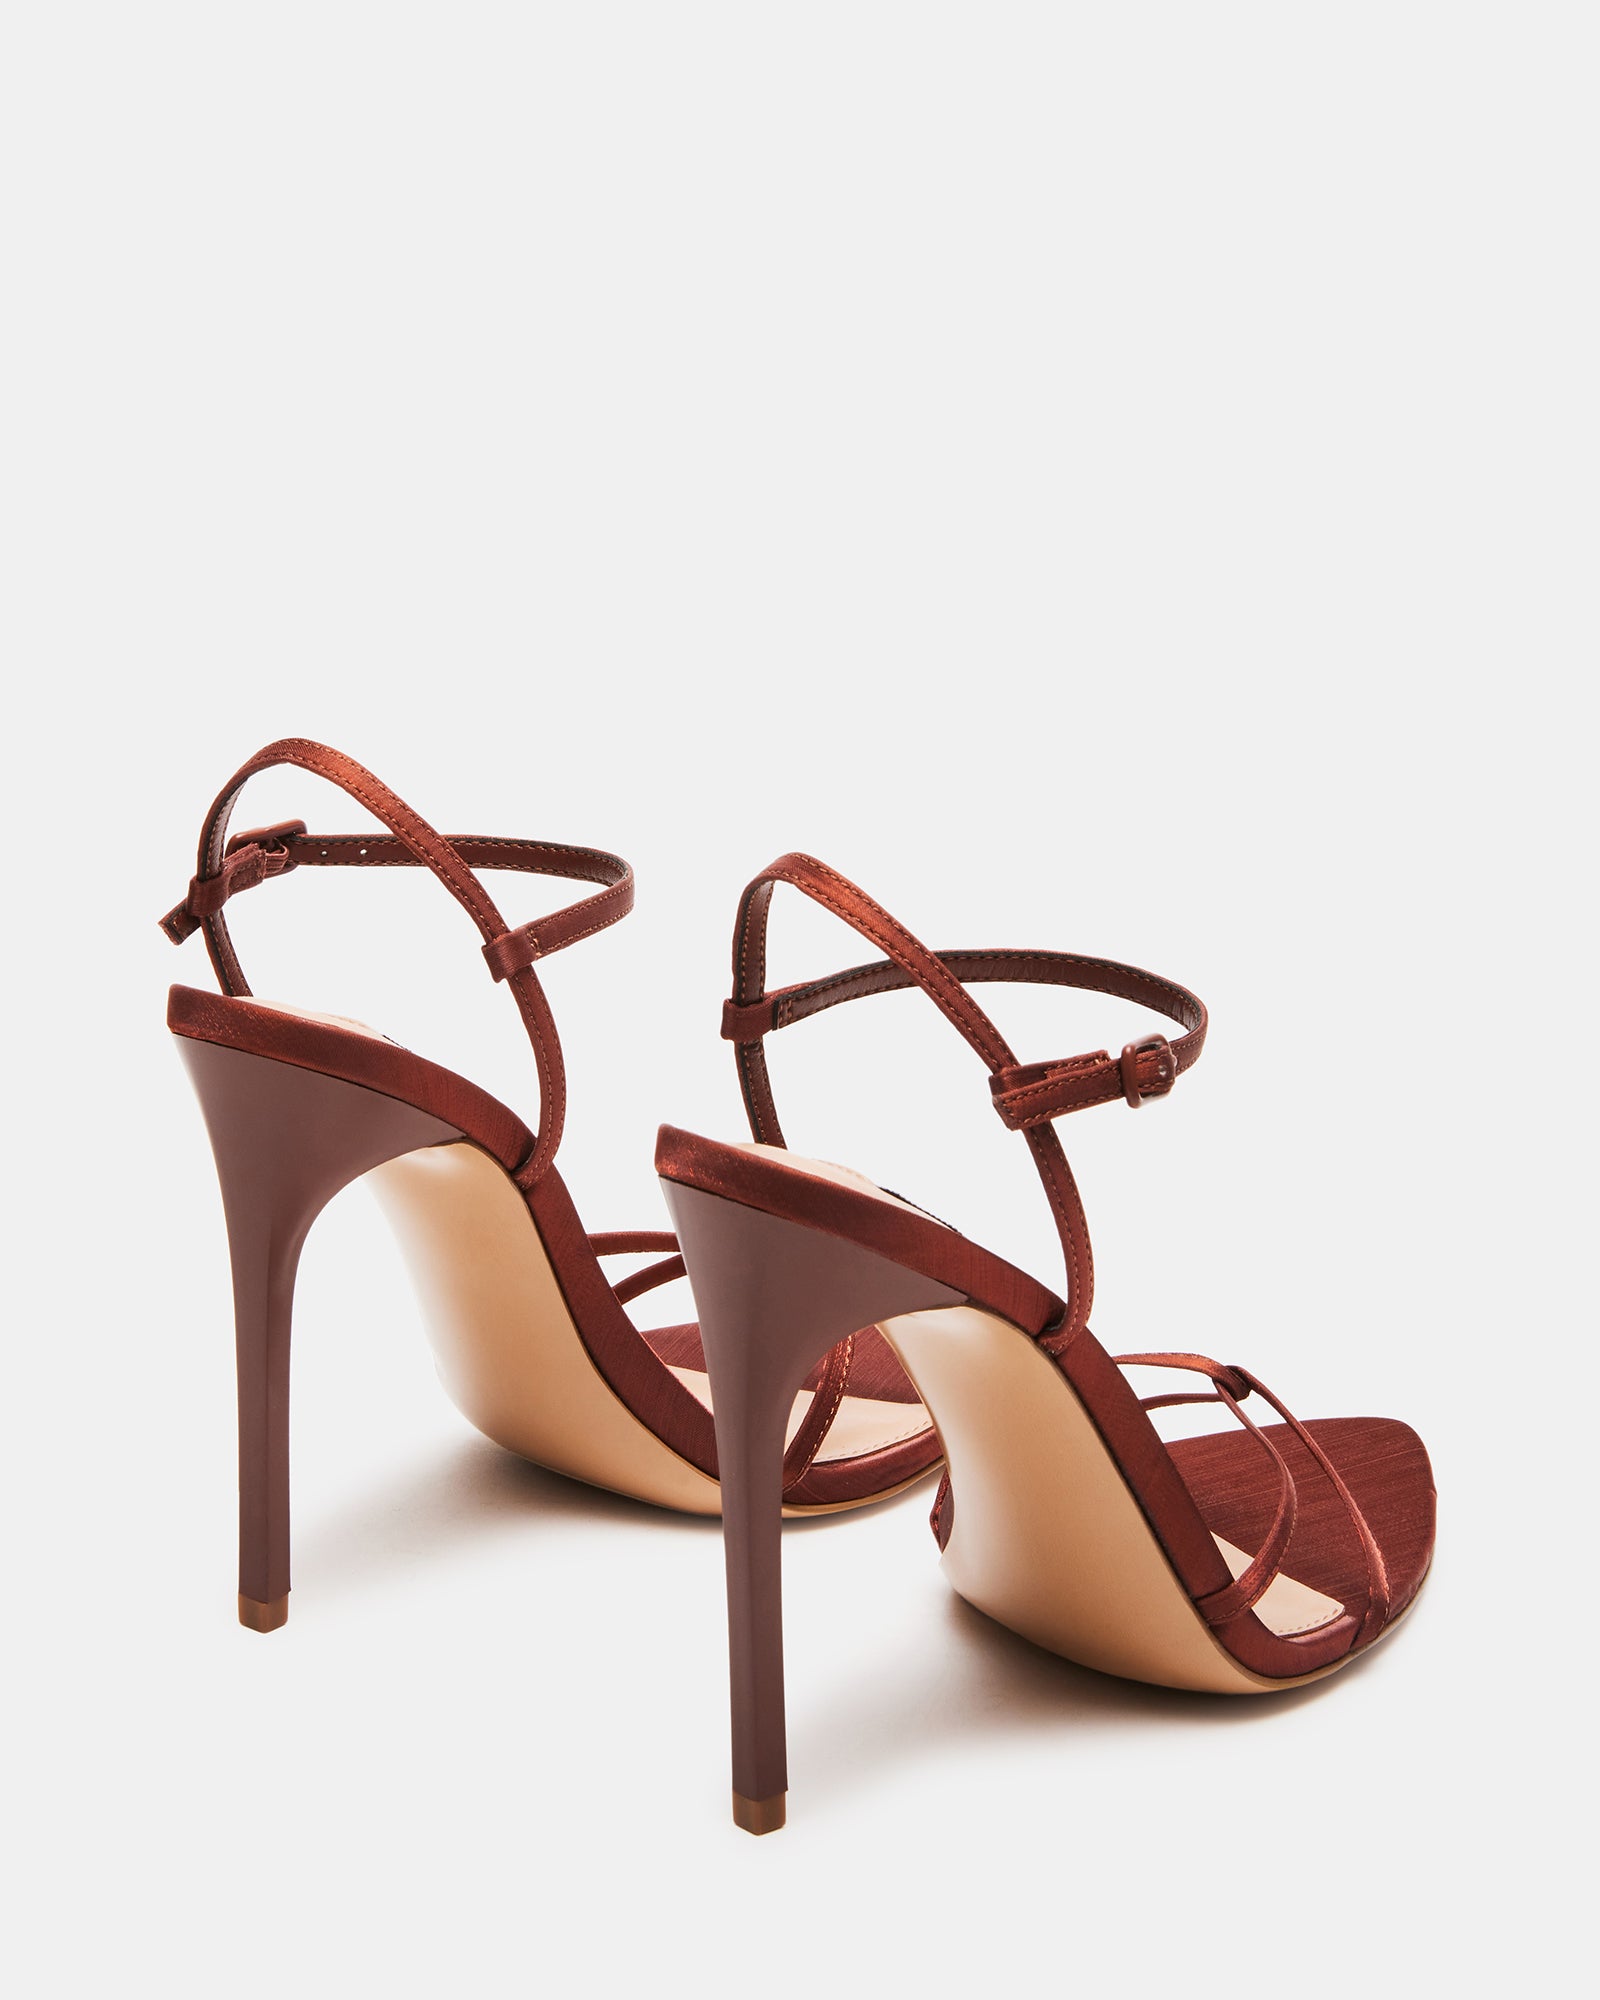 STELLINA Brown Satin Dainty Strappy Pointed Toe Heel | Women's Heels ...